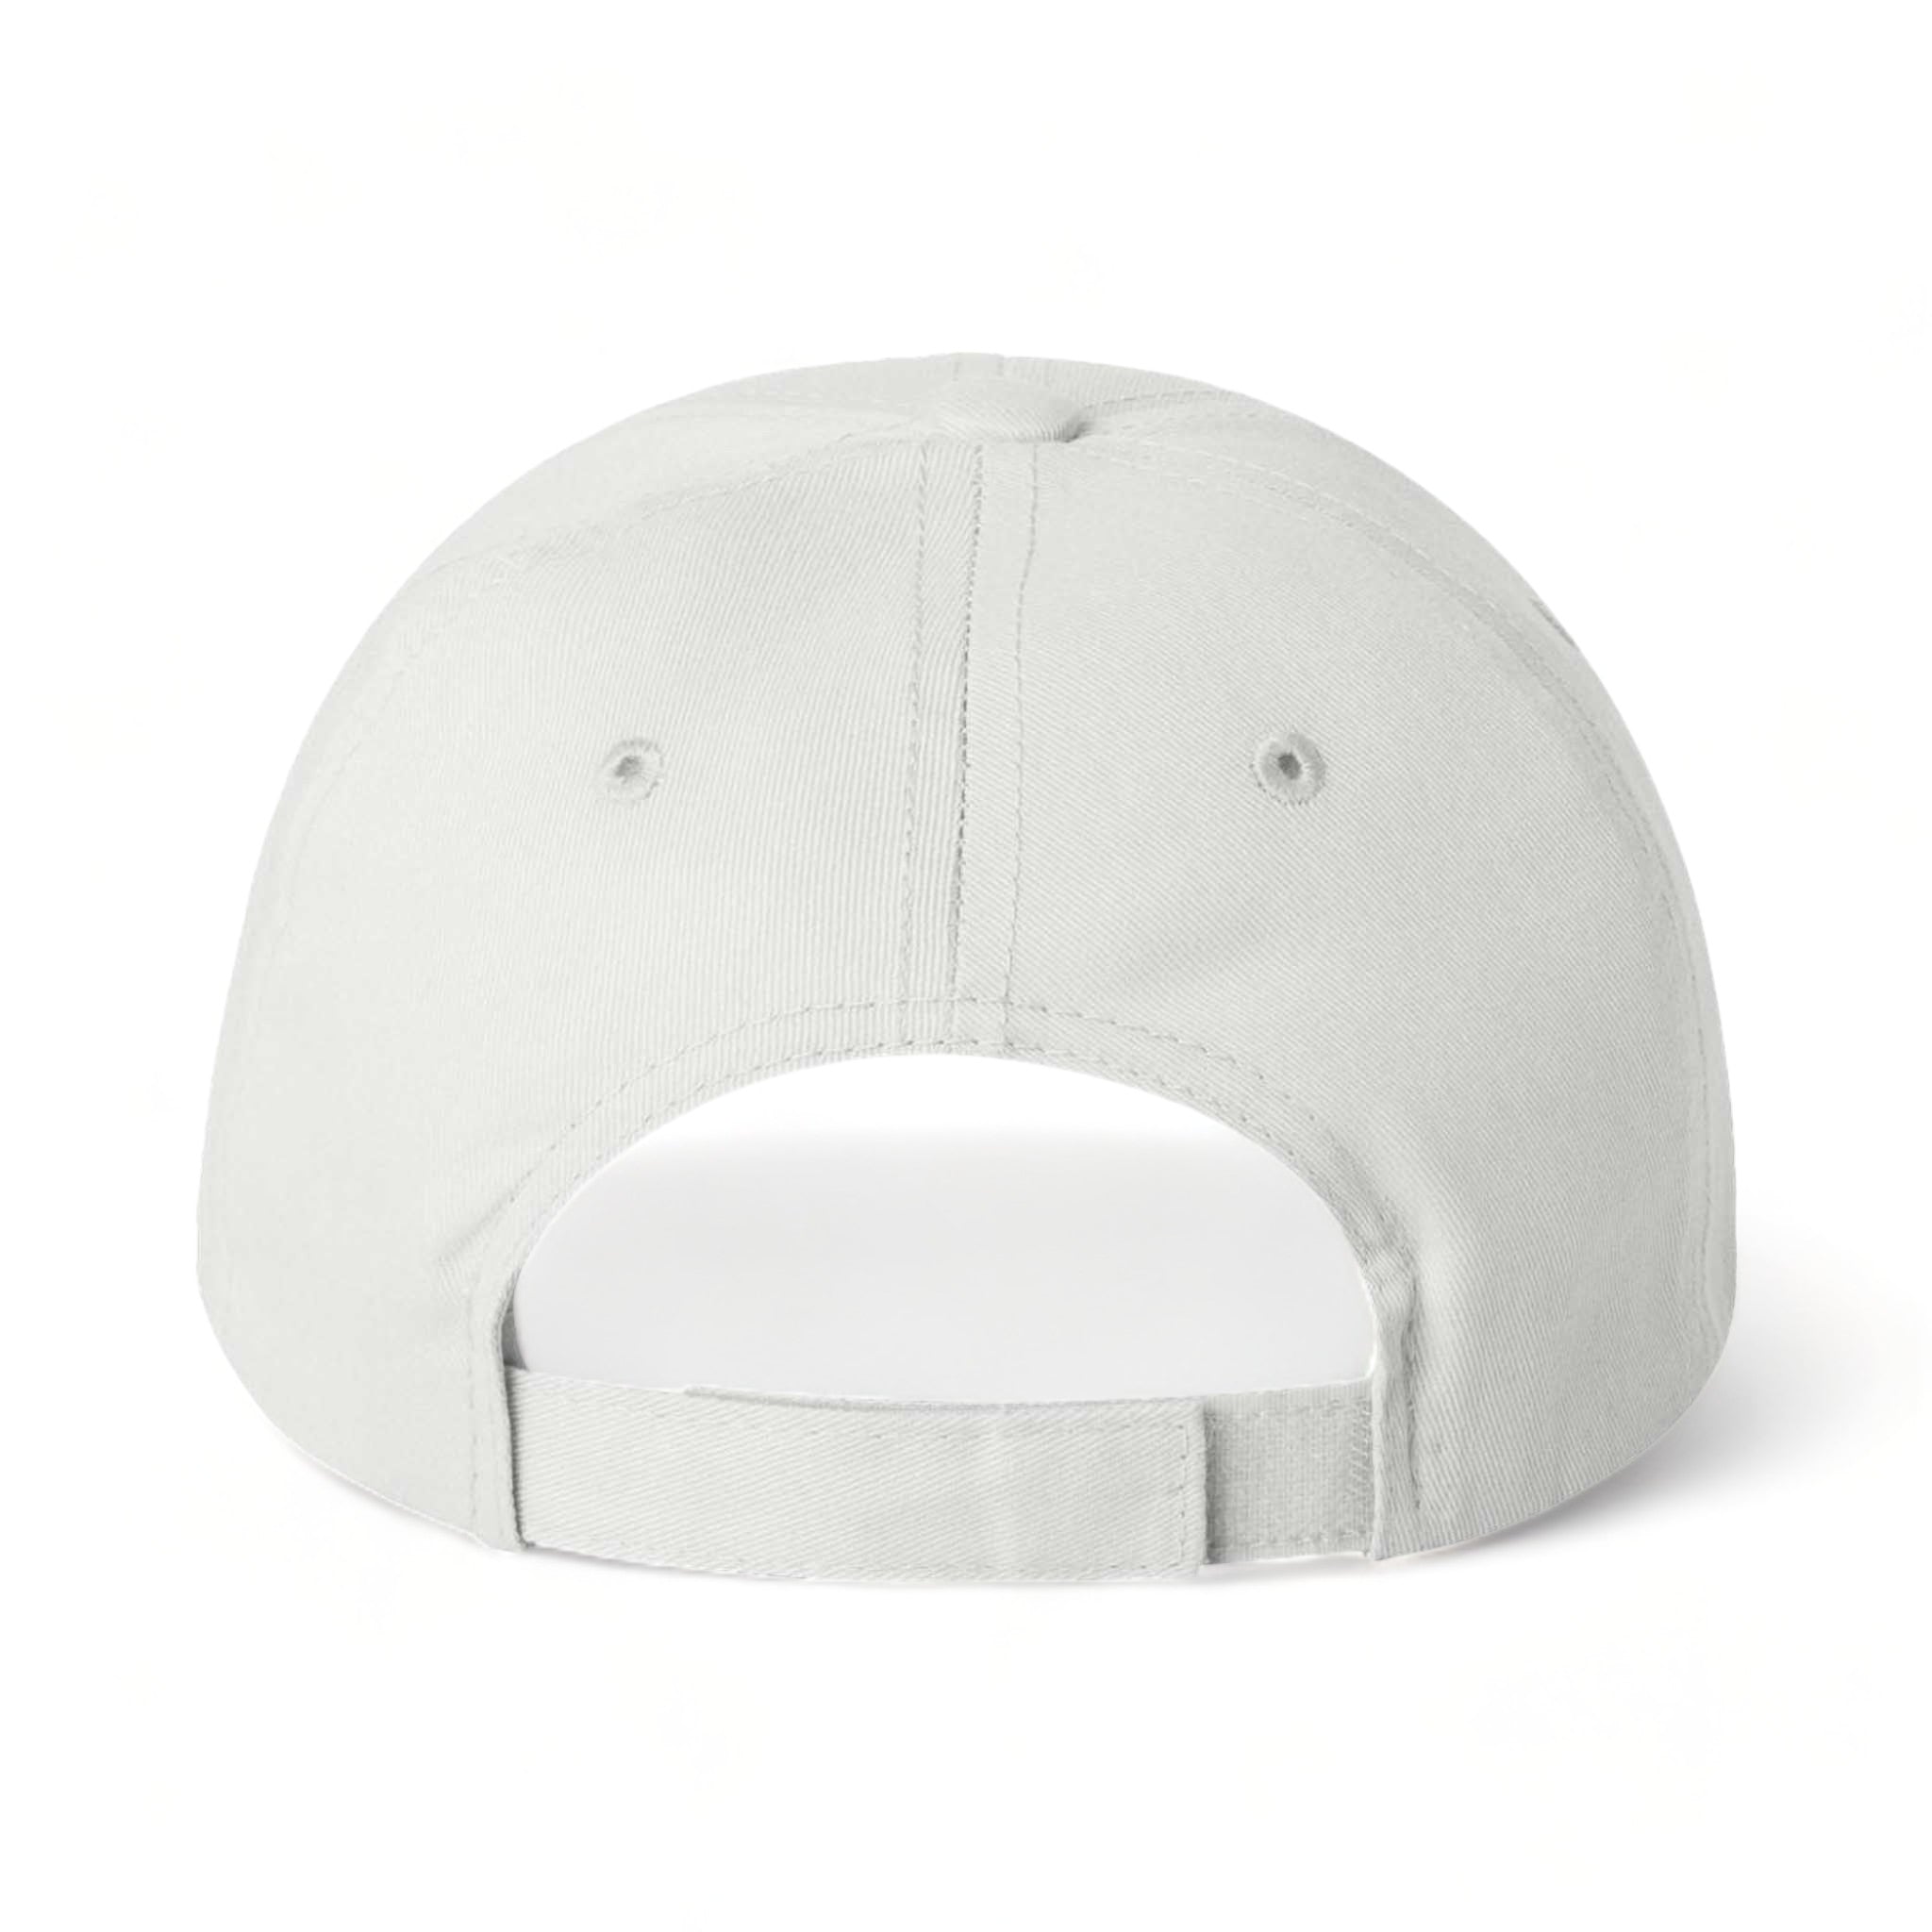 Back view of Sportsman 2260 custom hat in white